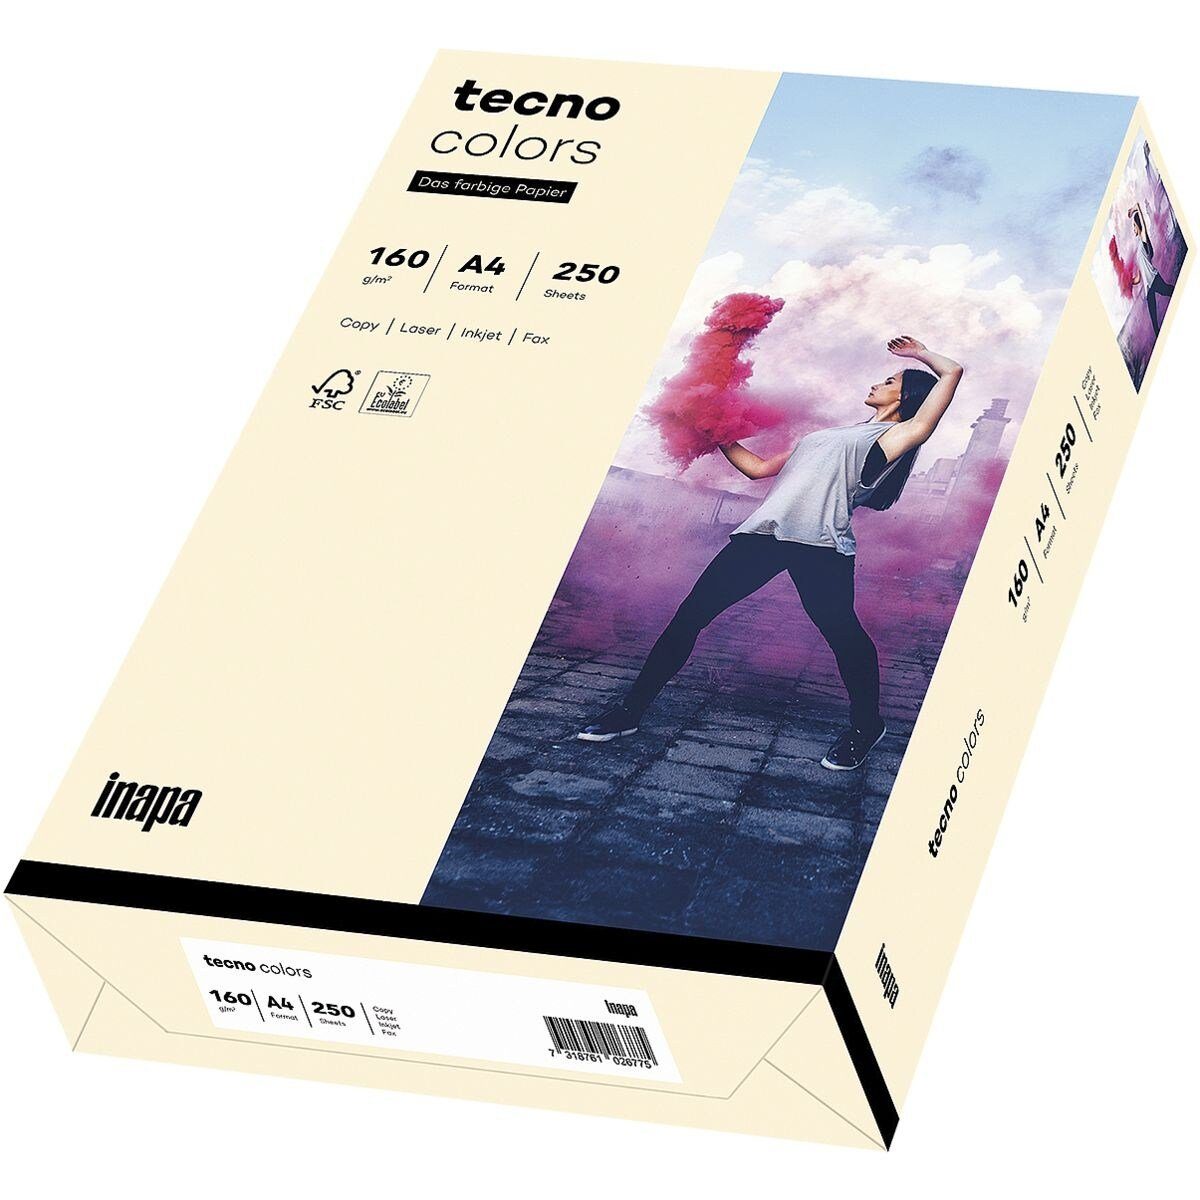 Inapa tecno Drucker- und Kopierpapier Rainbow / tecno Colors, Pastellfarben, Format DIN A4, 160 g/m², 250 Blatt hellchamois